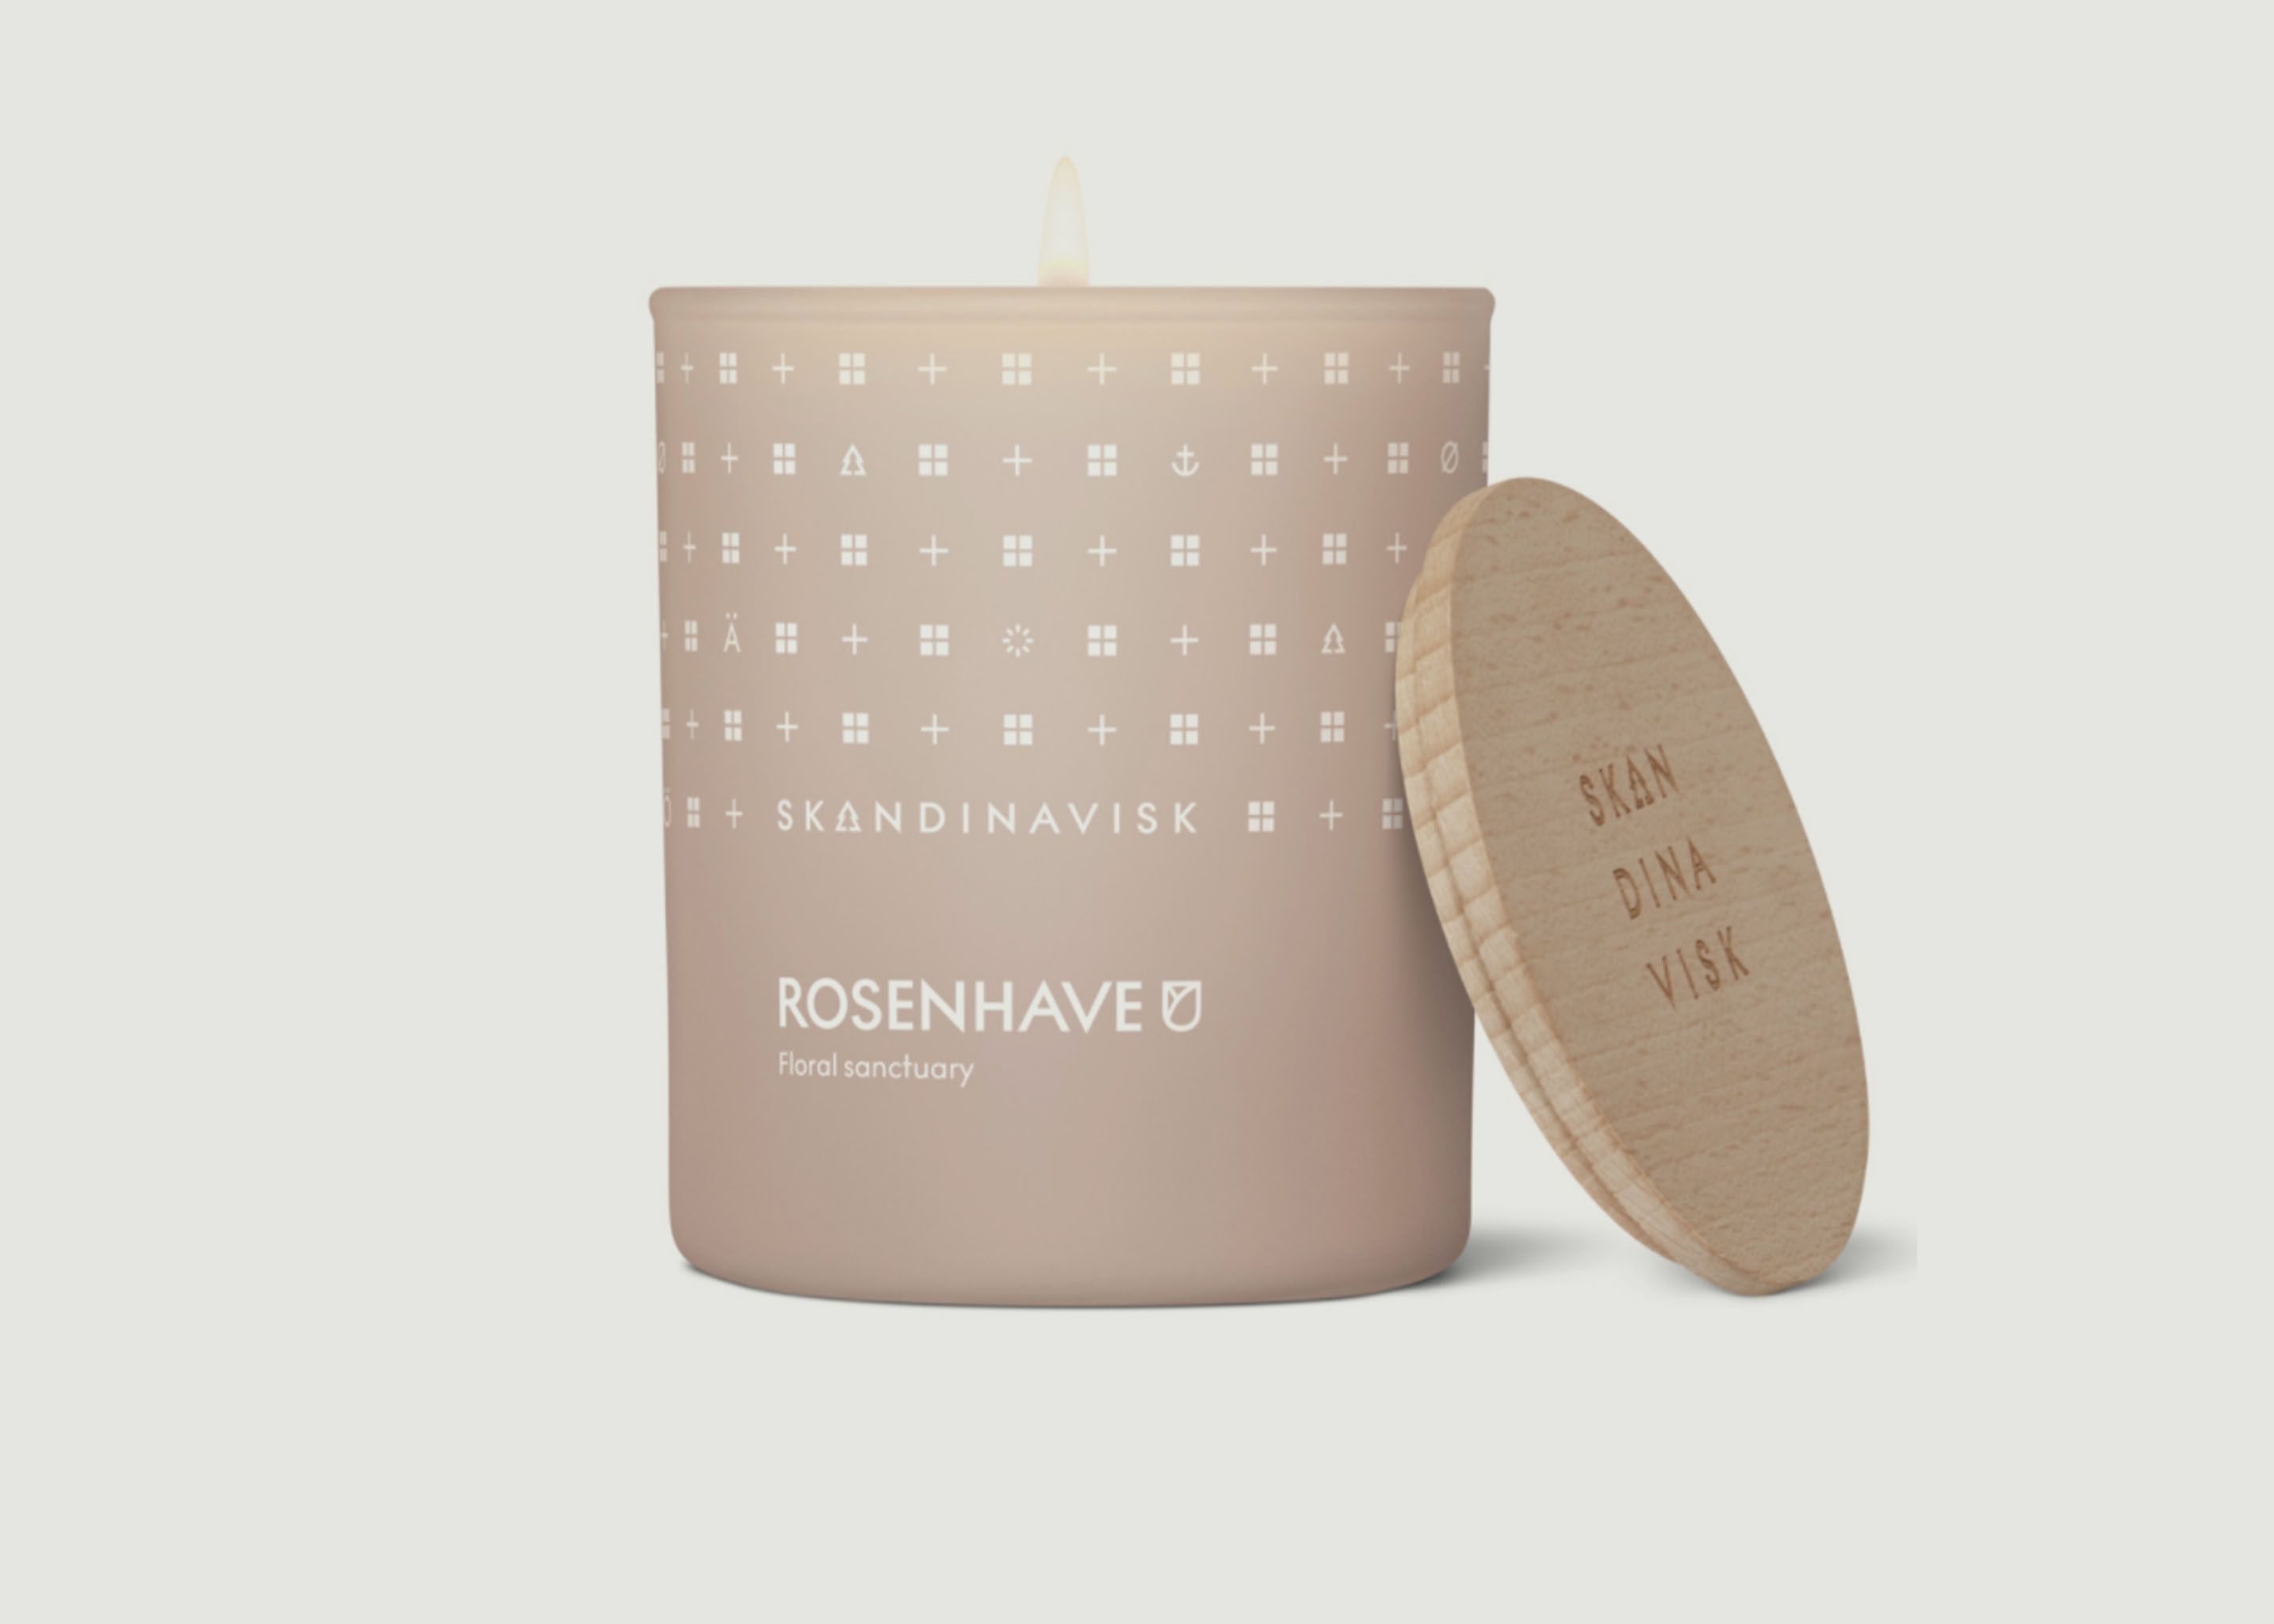 Rosenhave scented candle - Skandinavisk